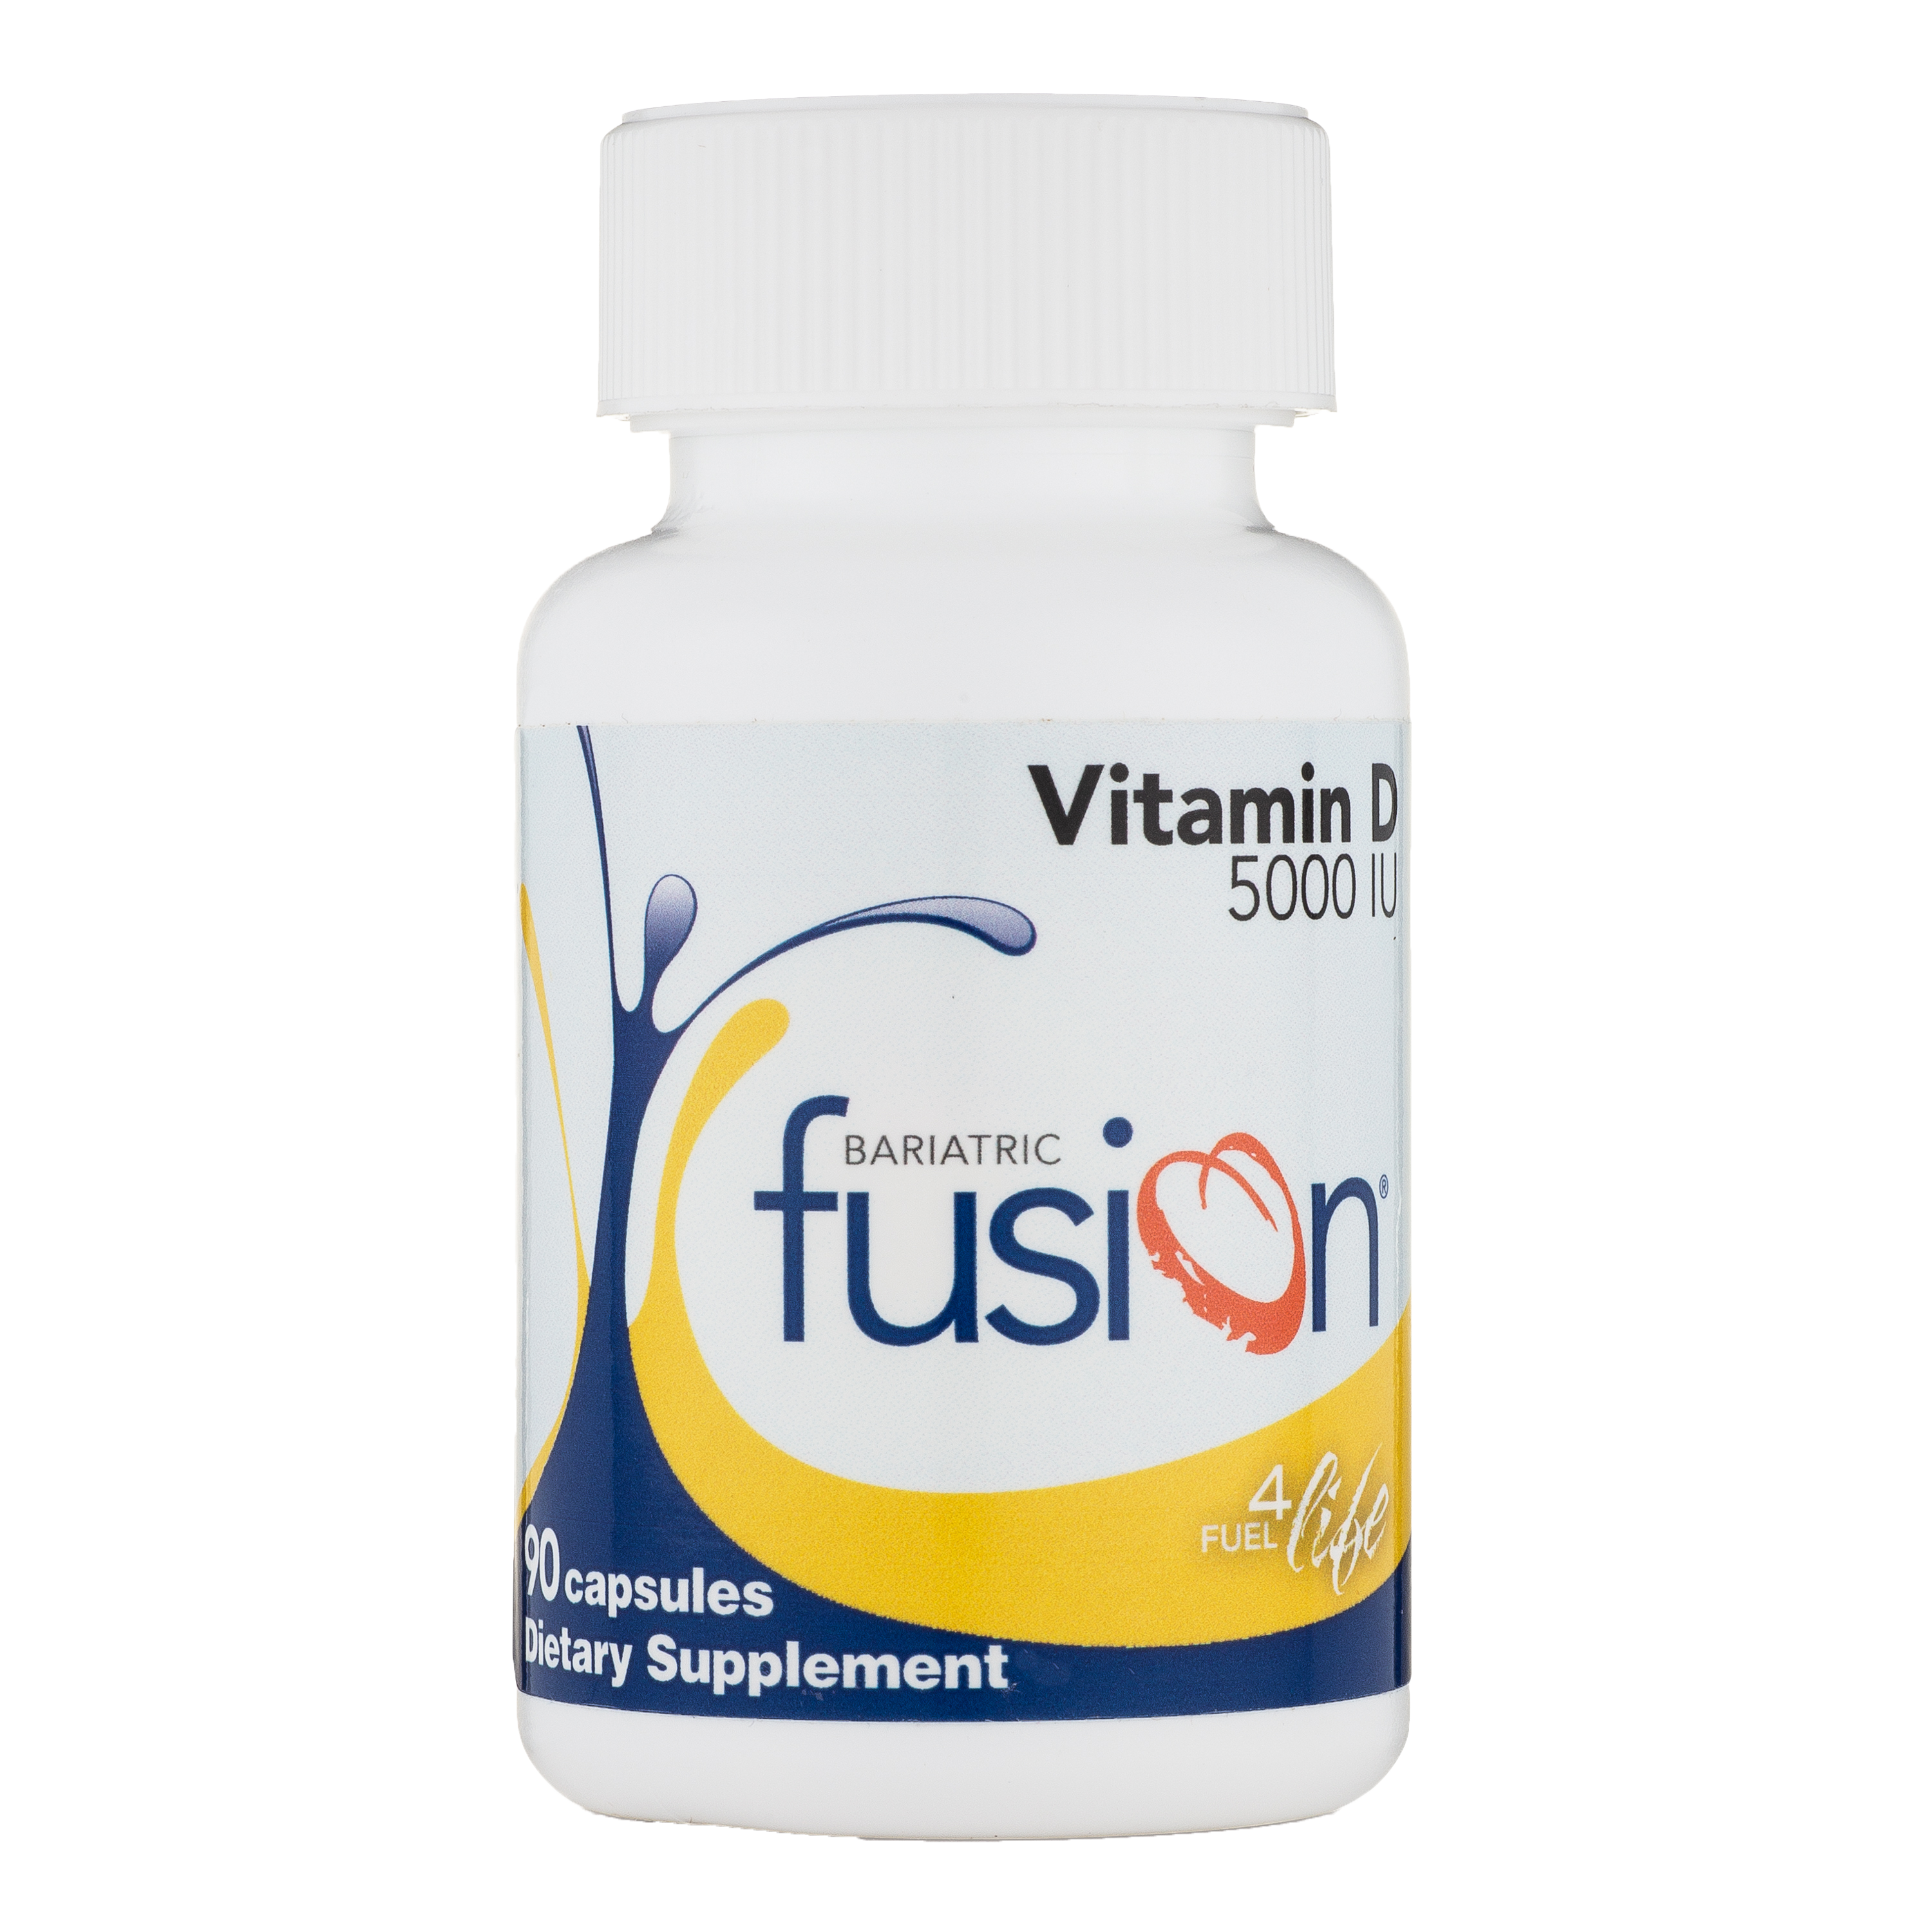 Vitamin D 5000 IU - Bariatric Fusion